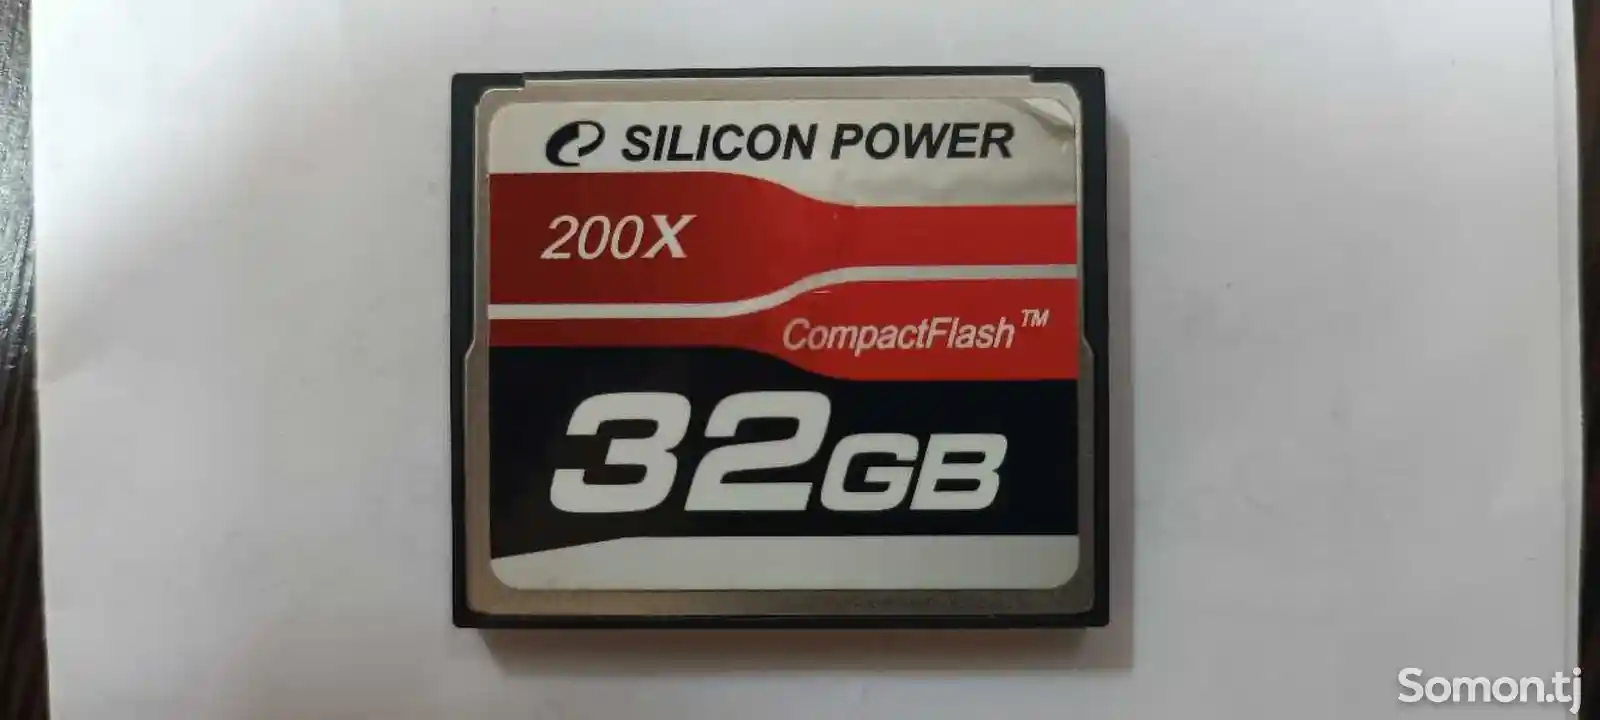 Объектив CF 32 GB